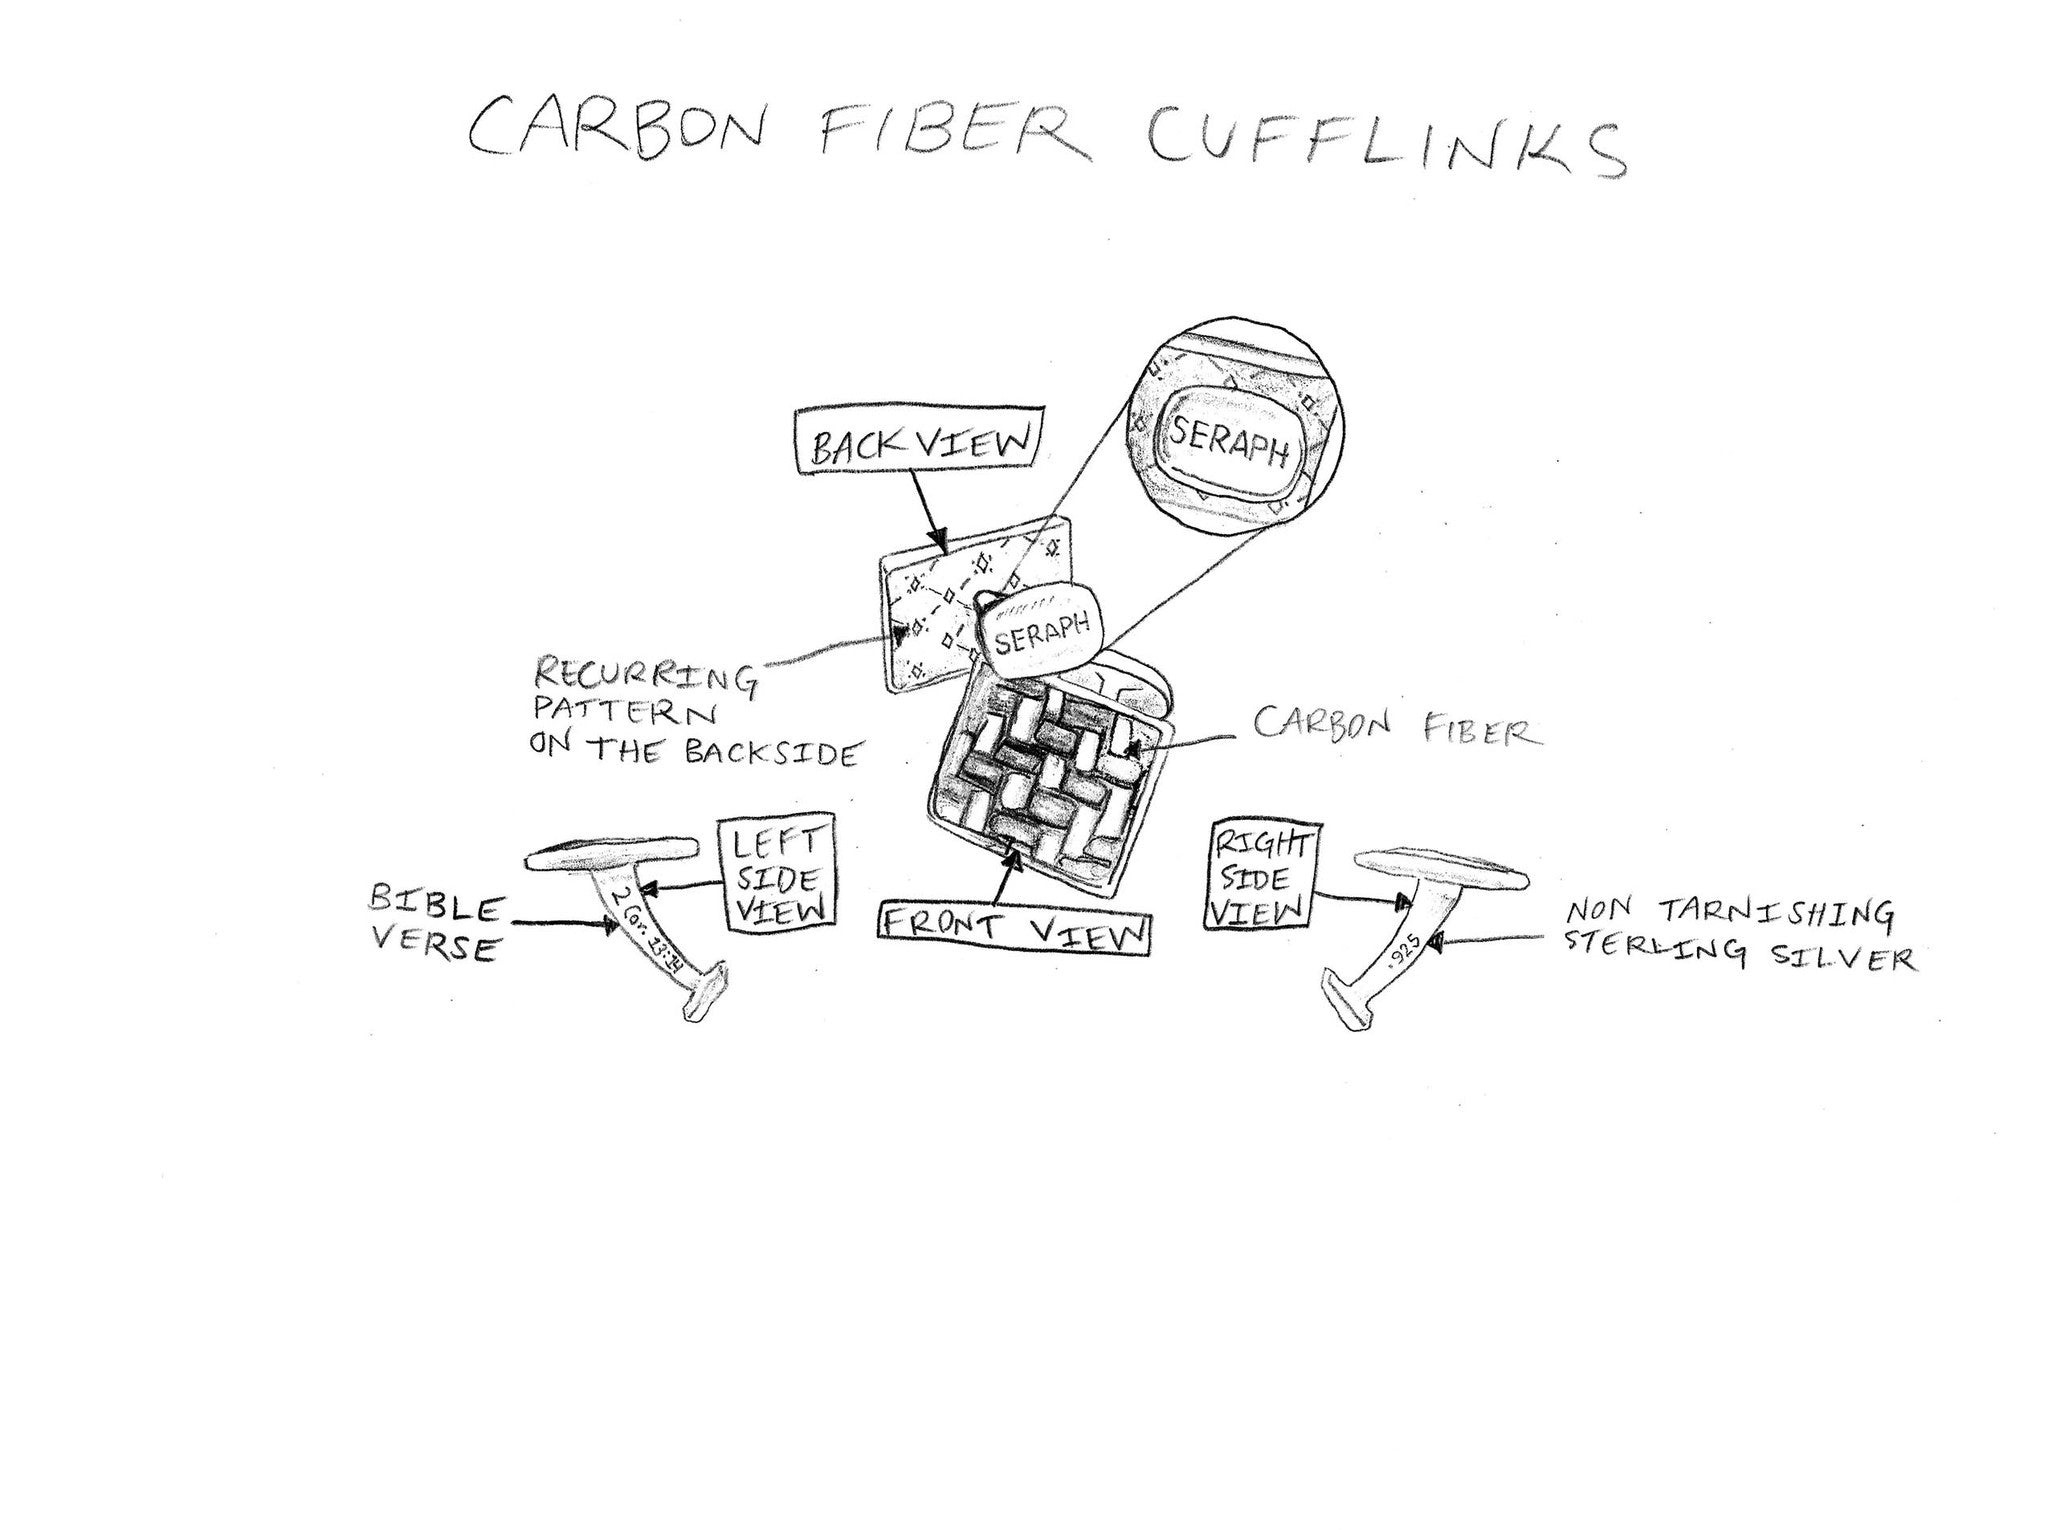 CUFFLINK - Carbon Fiber - Onyx